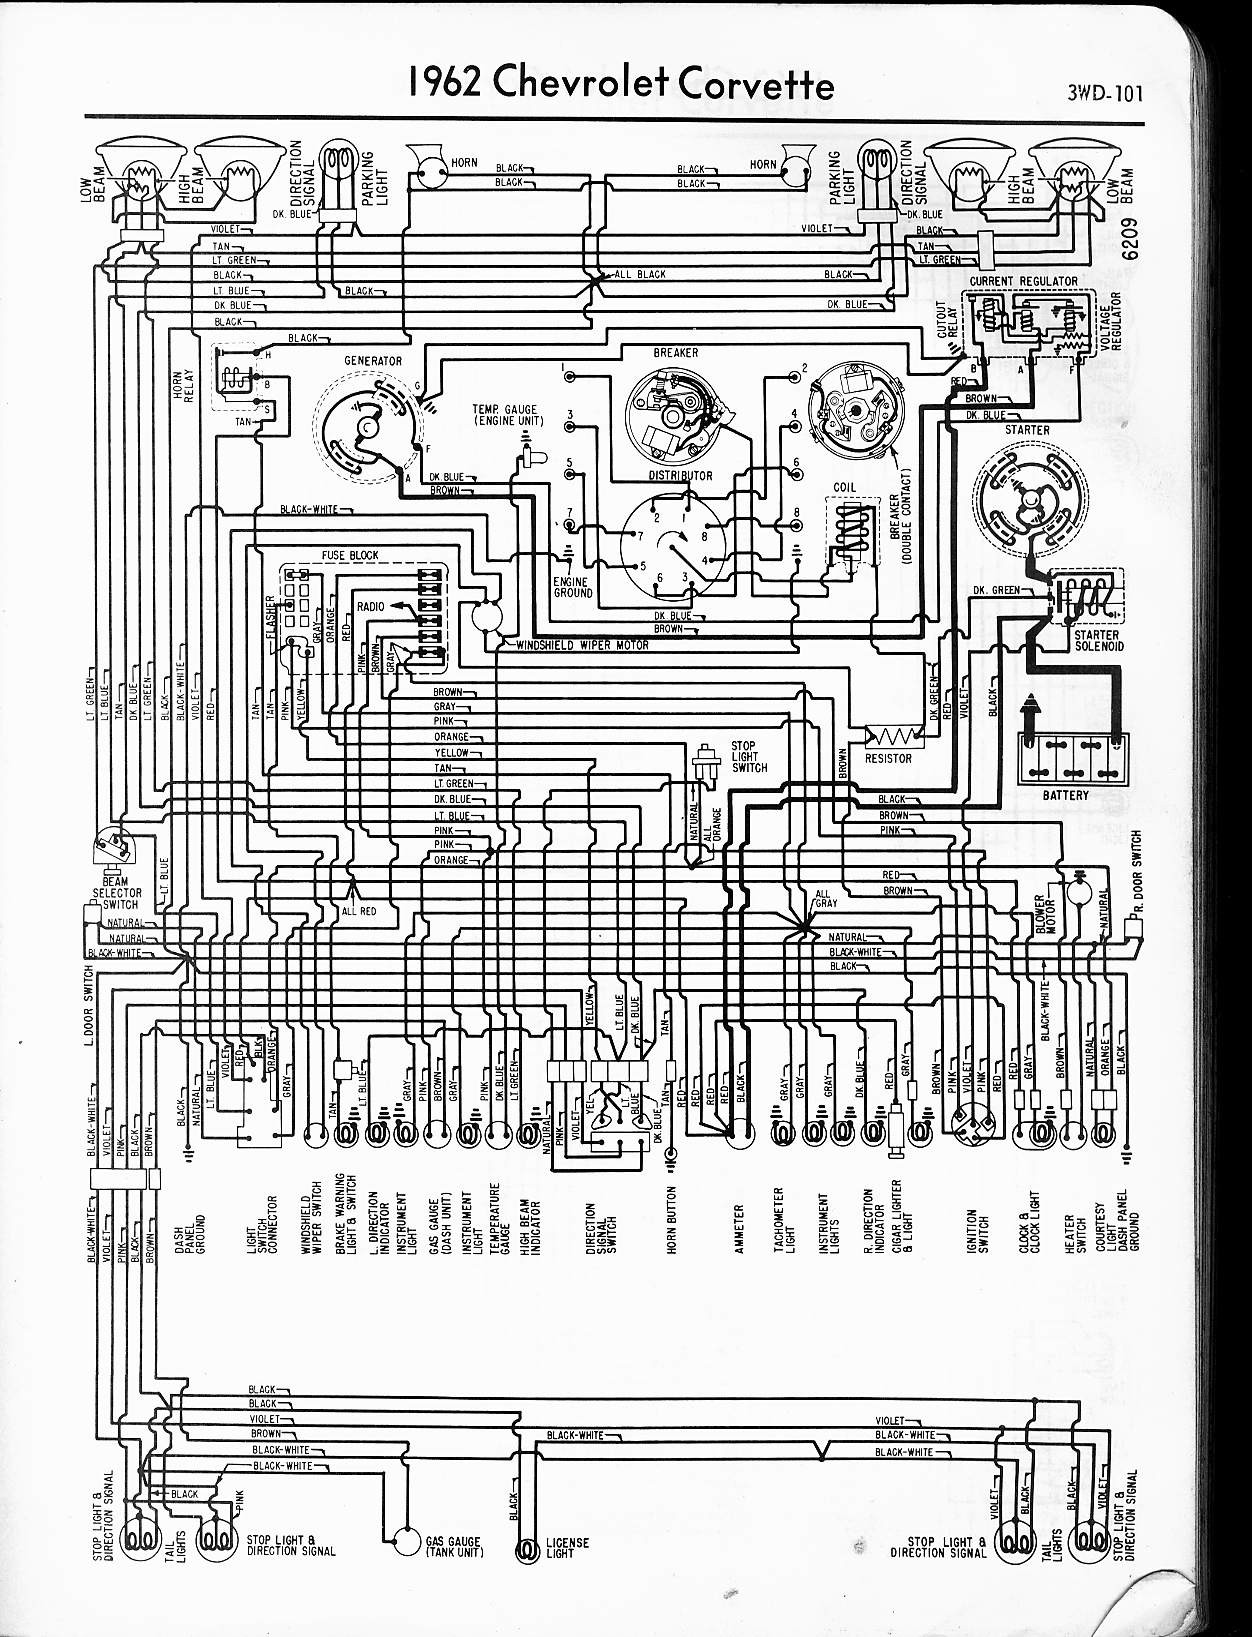 1968 Chevelle Wiring Diagram Free 57 – 65 Chevy Wiring Diagrams Of 1968 Chevelle Wiring Diagram Free